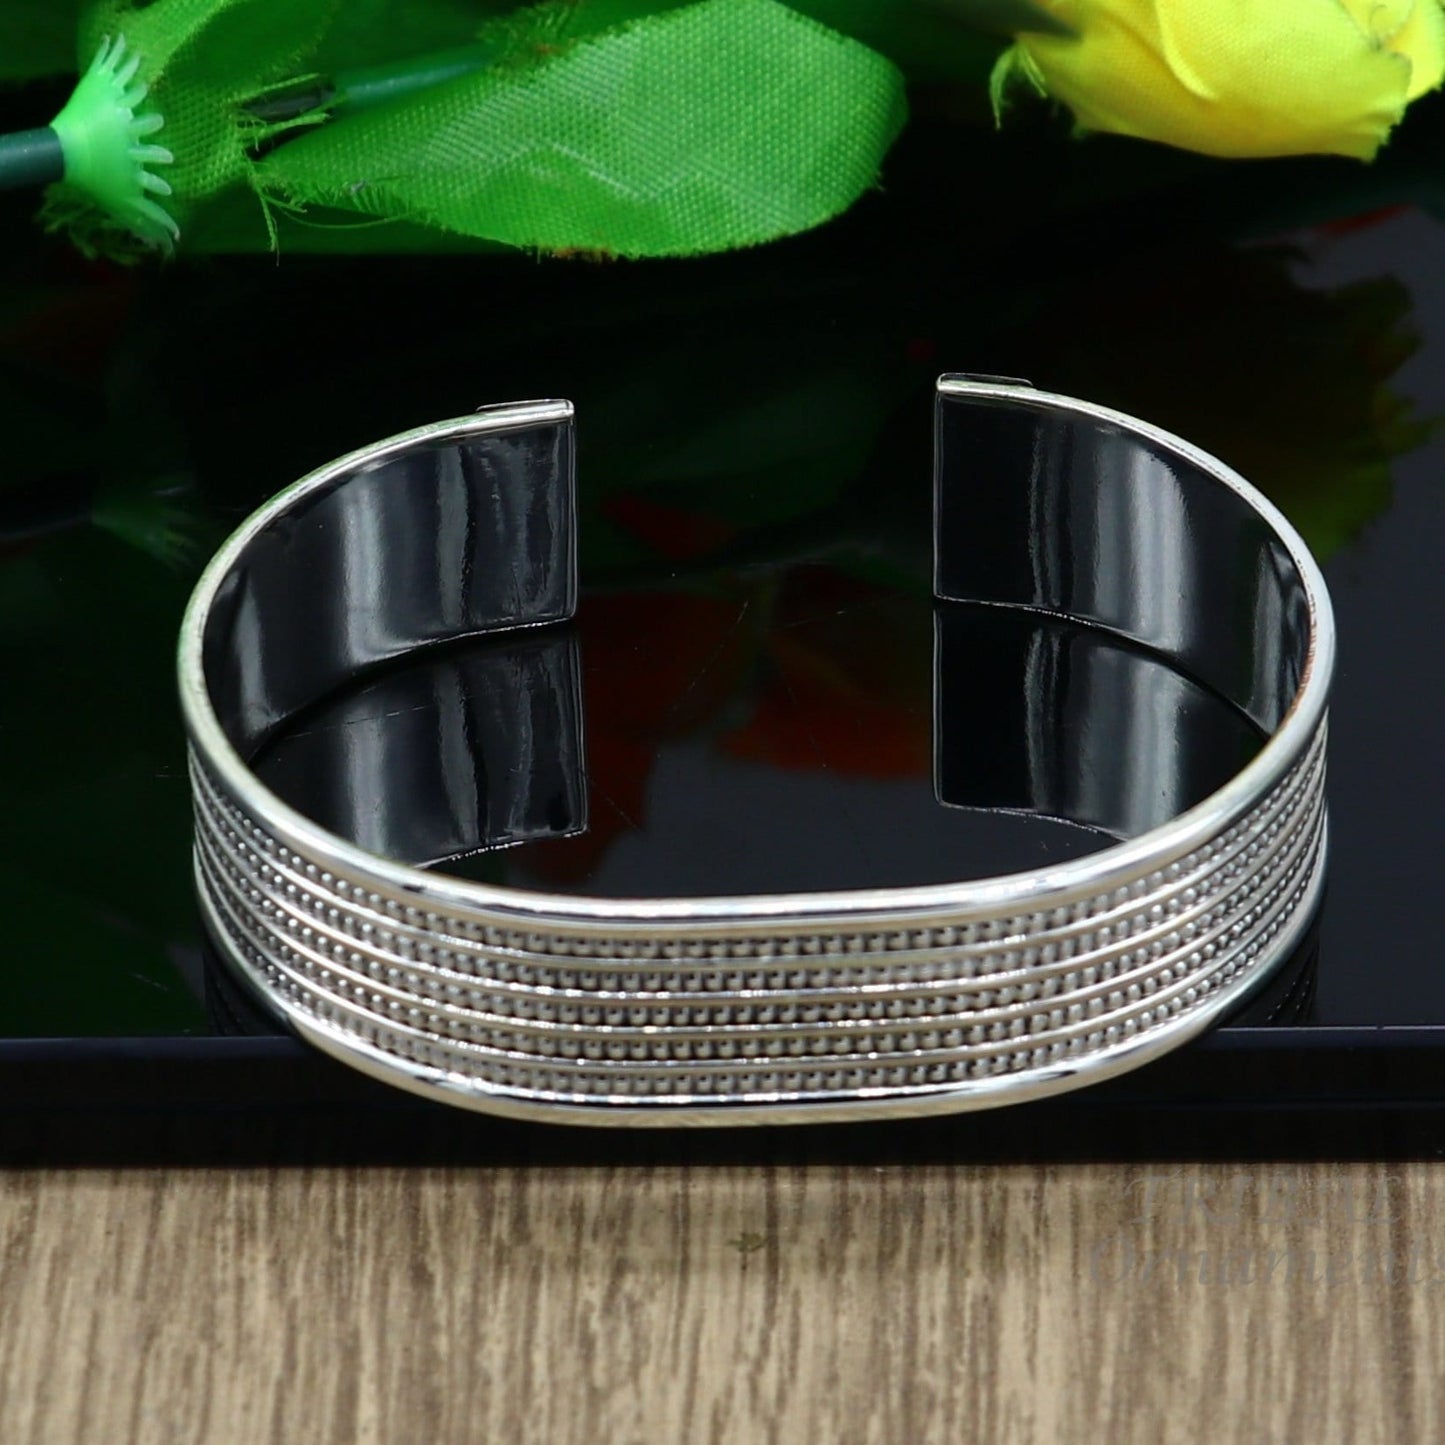 925 sterling silver handmade adjustable open face kada bangle cuff bracelet, elegant unisex personalized gifting cuff jewelry cuff143 - TRIBAL ORNAMENTS